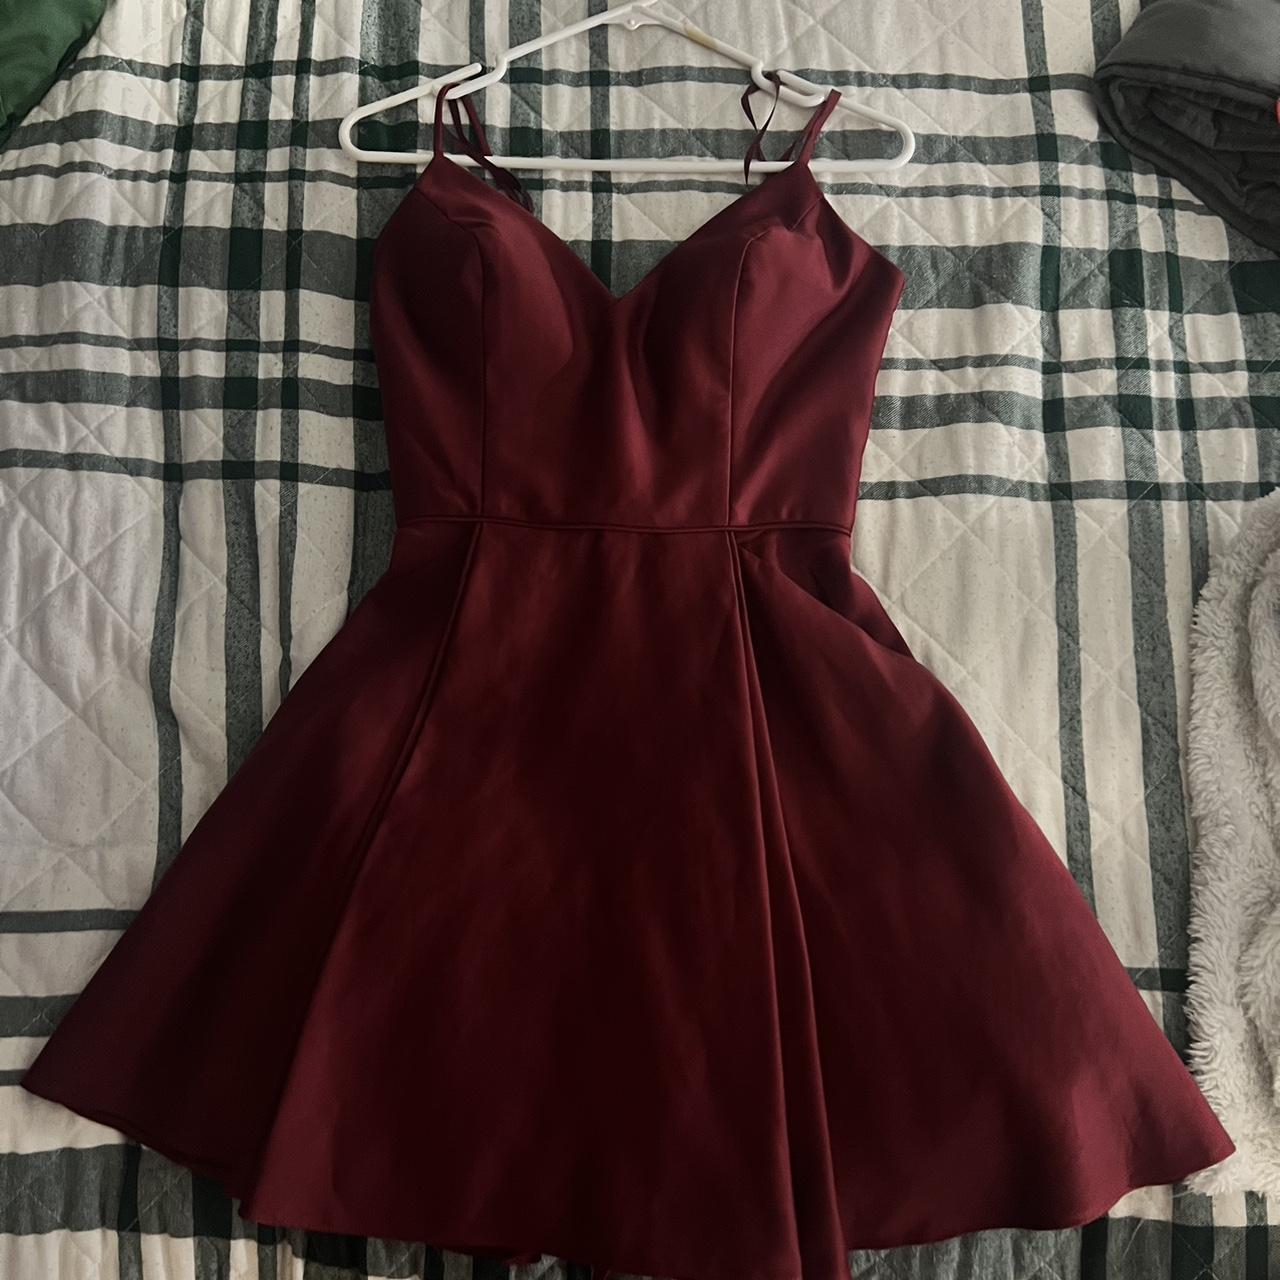 macys red dress